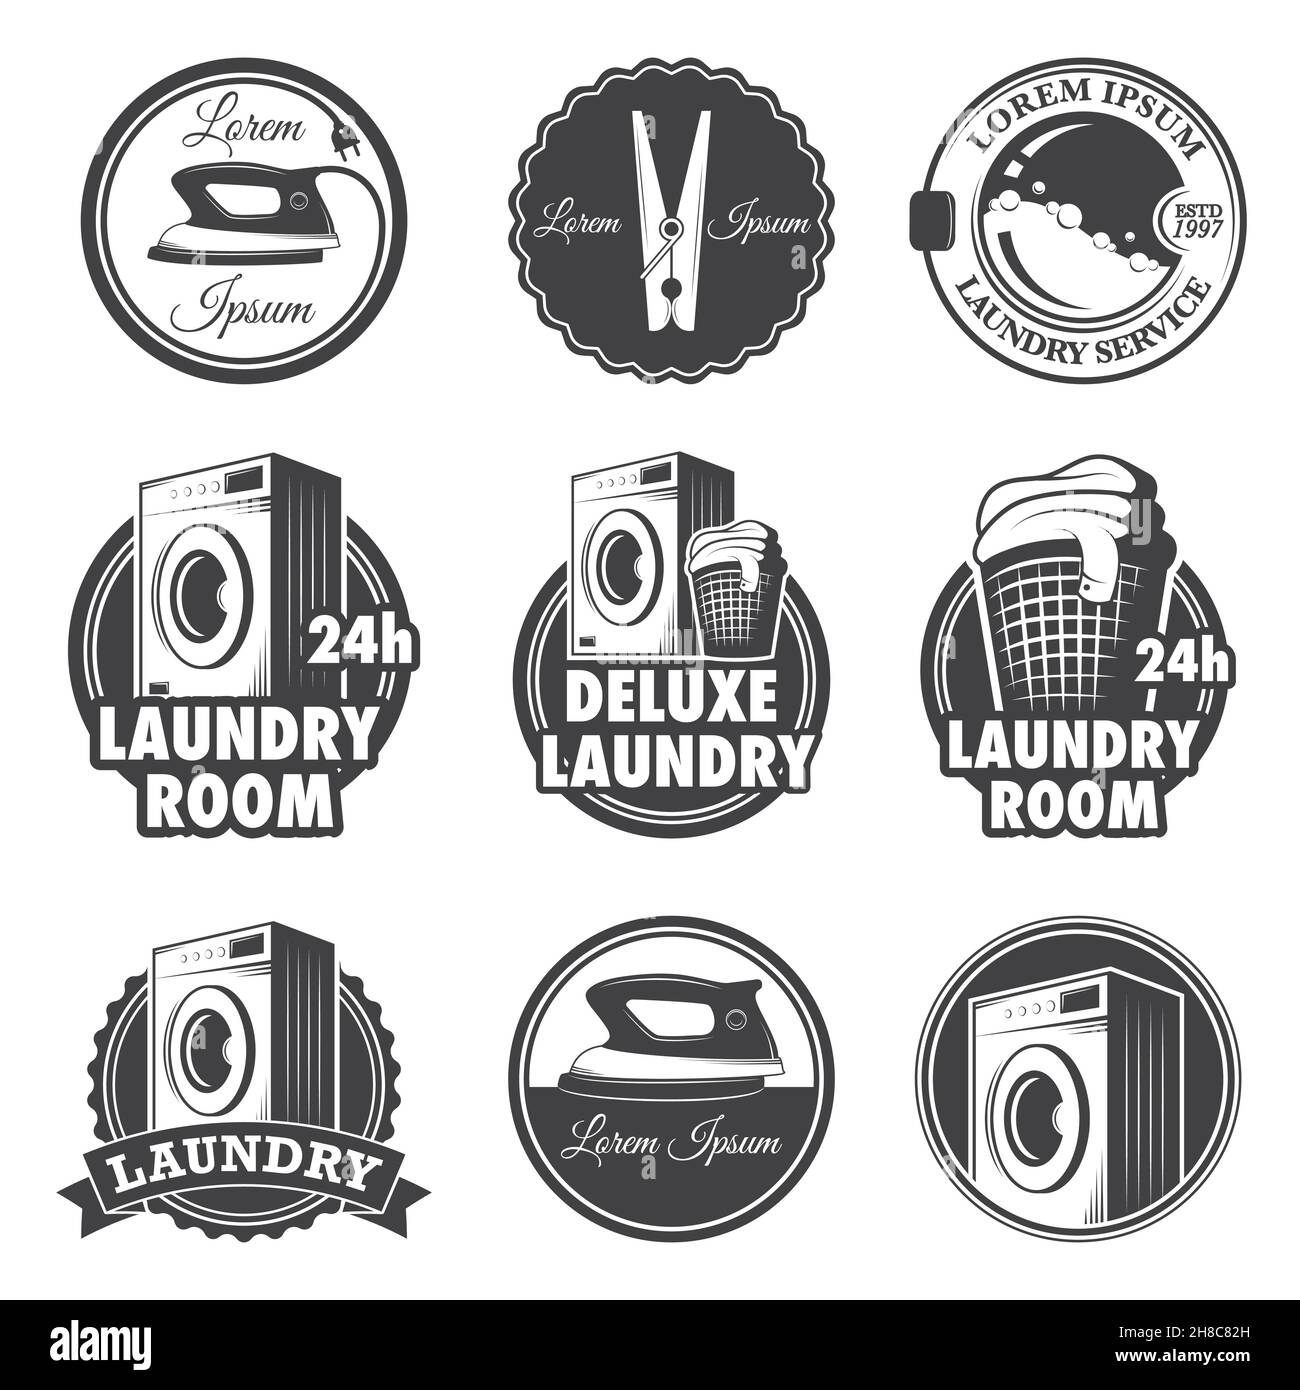 Set of vintage laundry emblems, labels and designed elements. Stock Vector